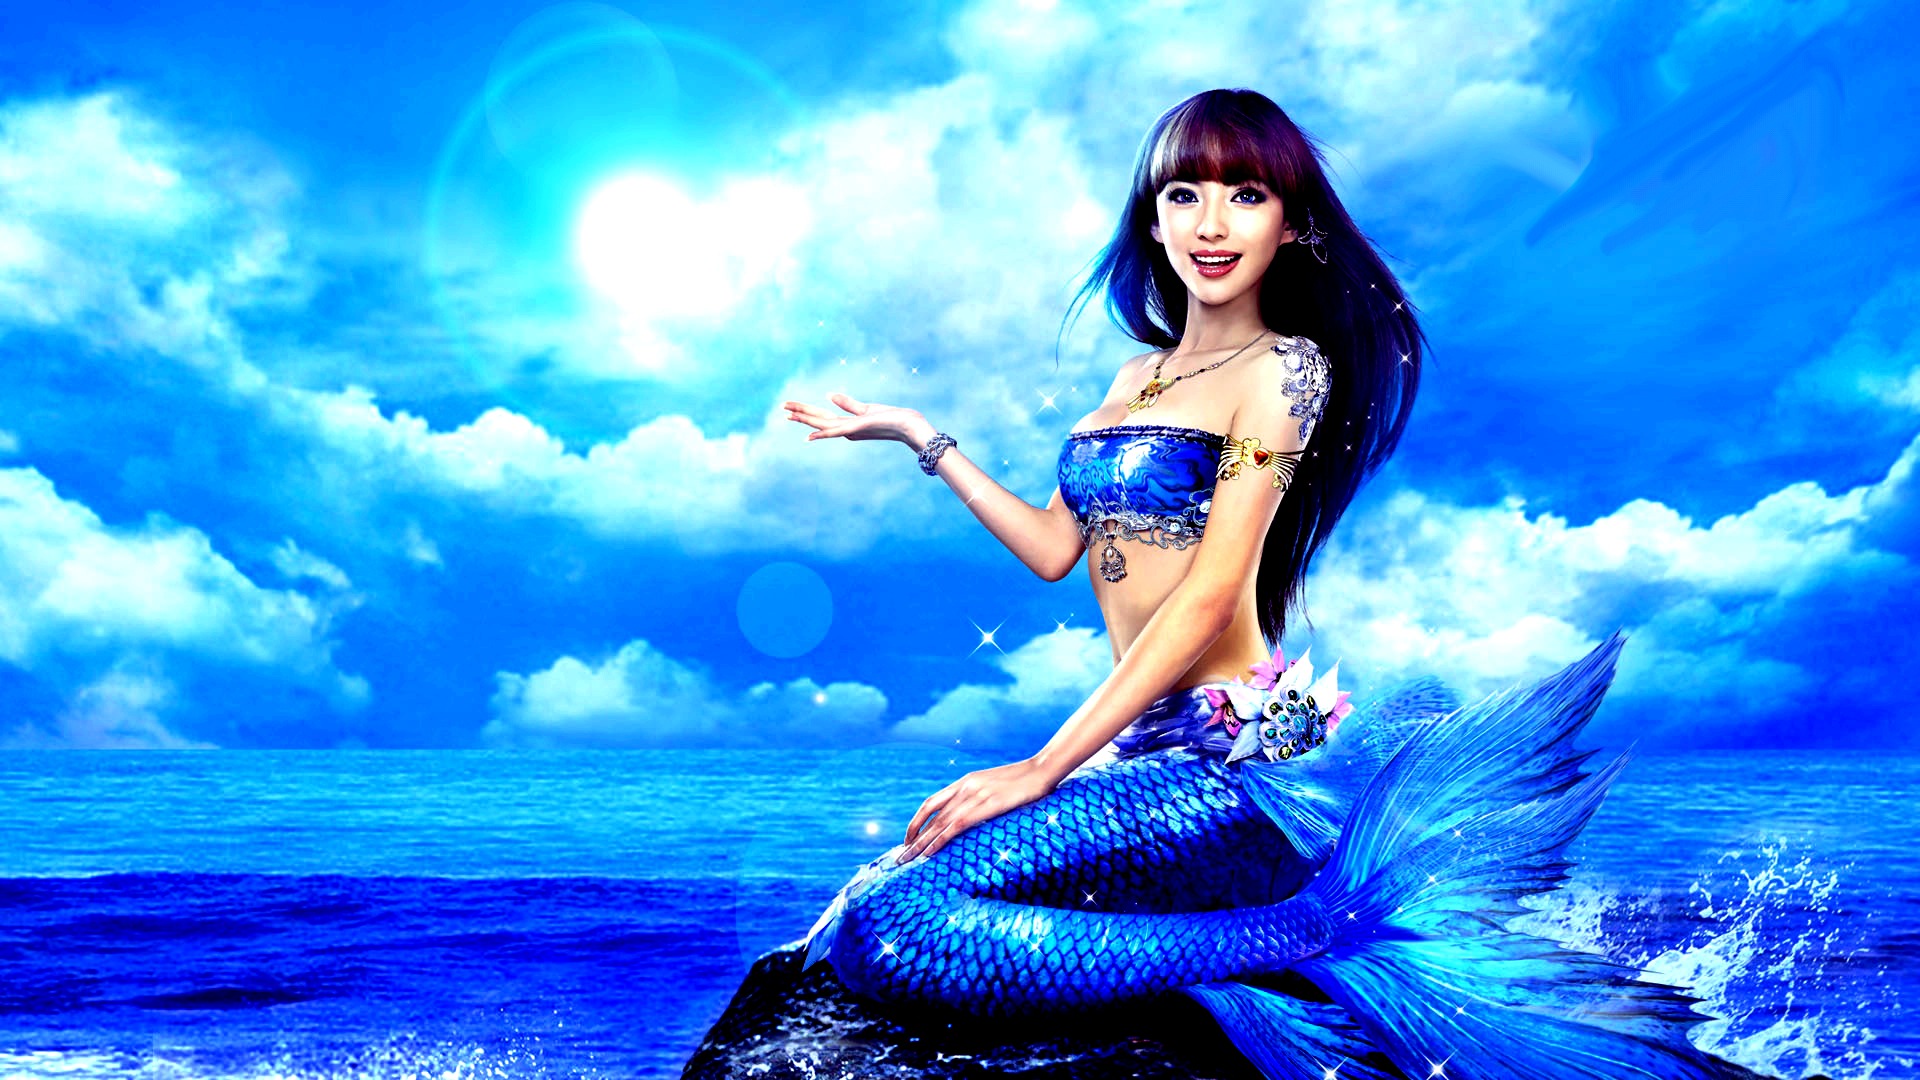 Fantasy Image Mermaid Wallpaper Photos